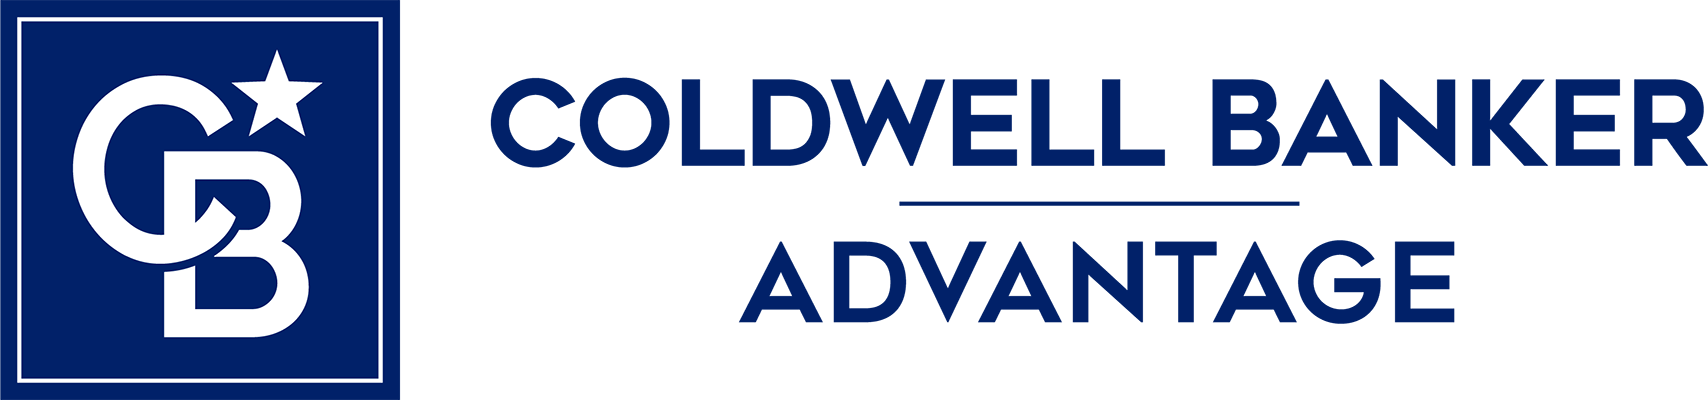 Melissa Gordon - Coldwell Banker Advantage Logo